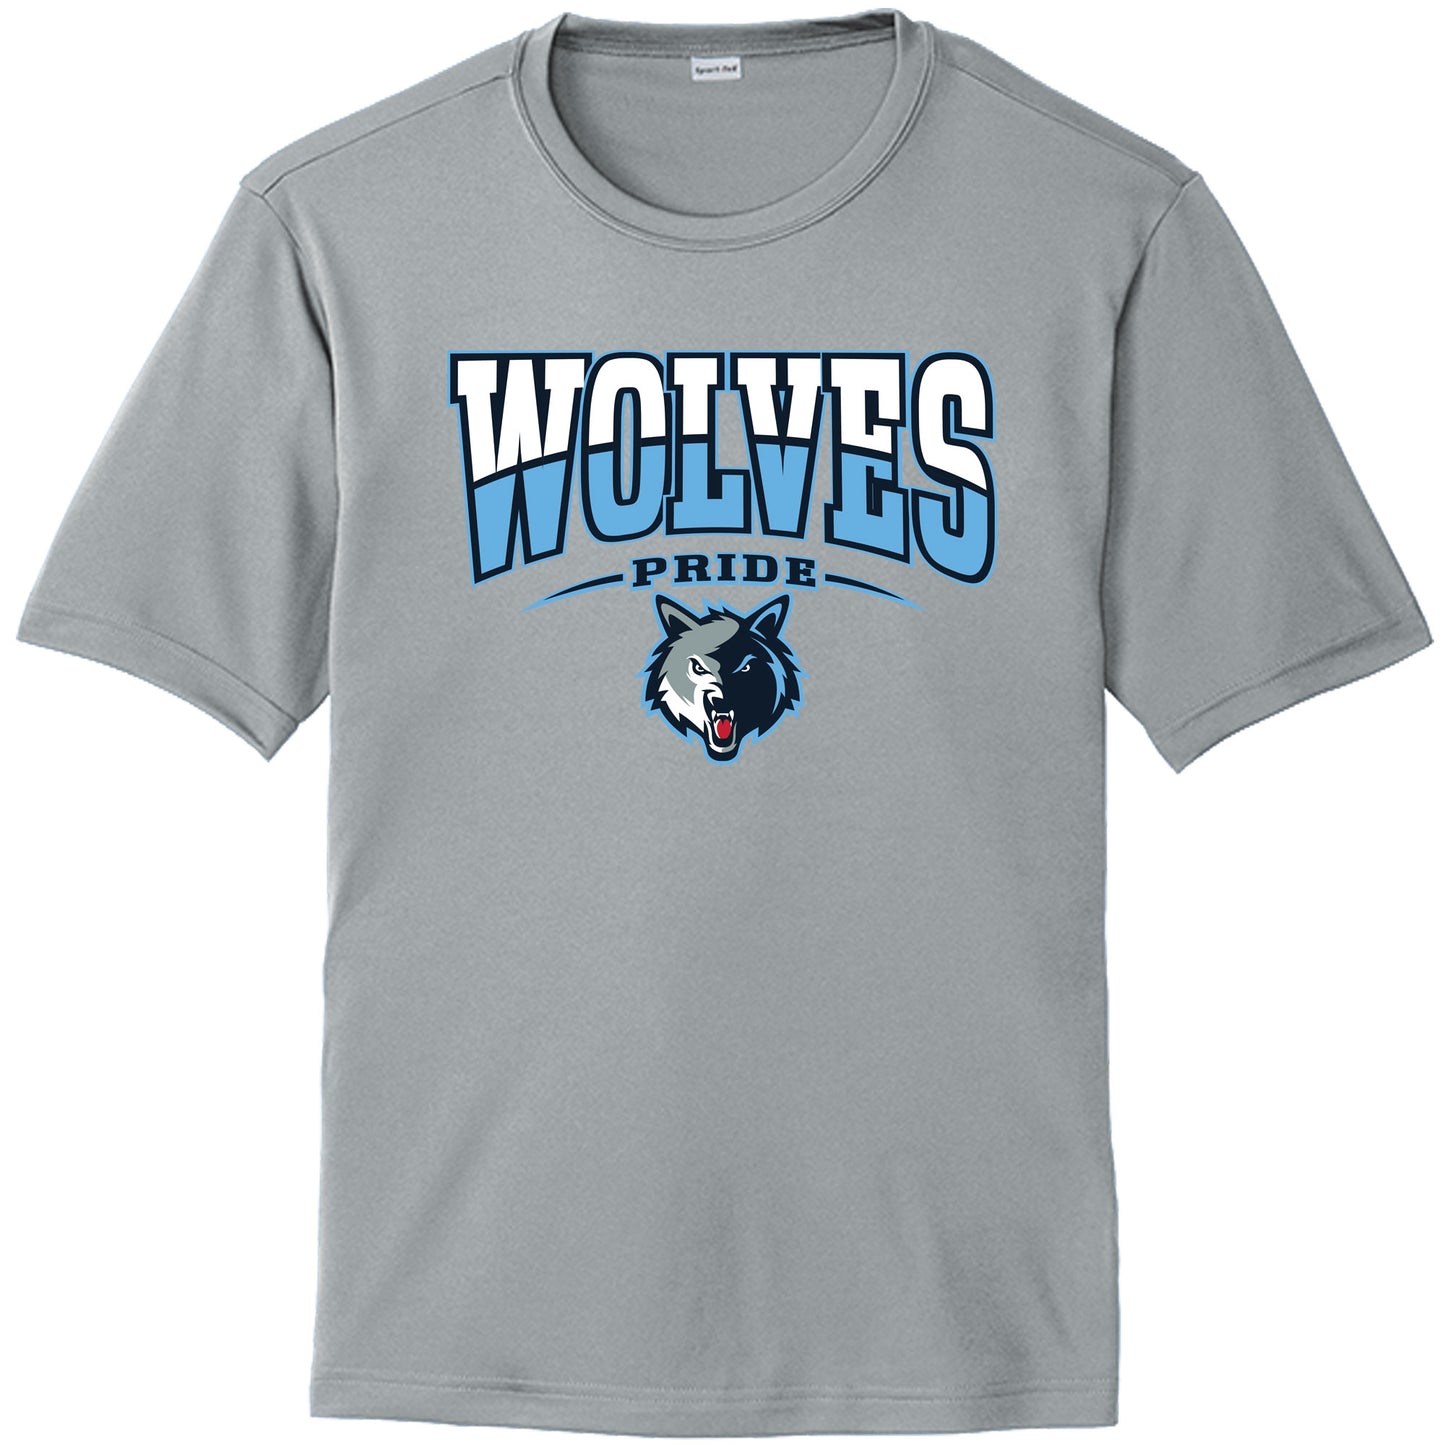 Newsome High School Drifit Shirt "Wolves Pride"